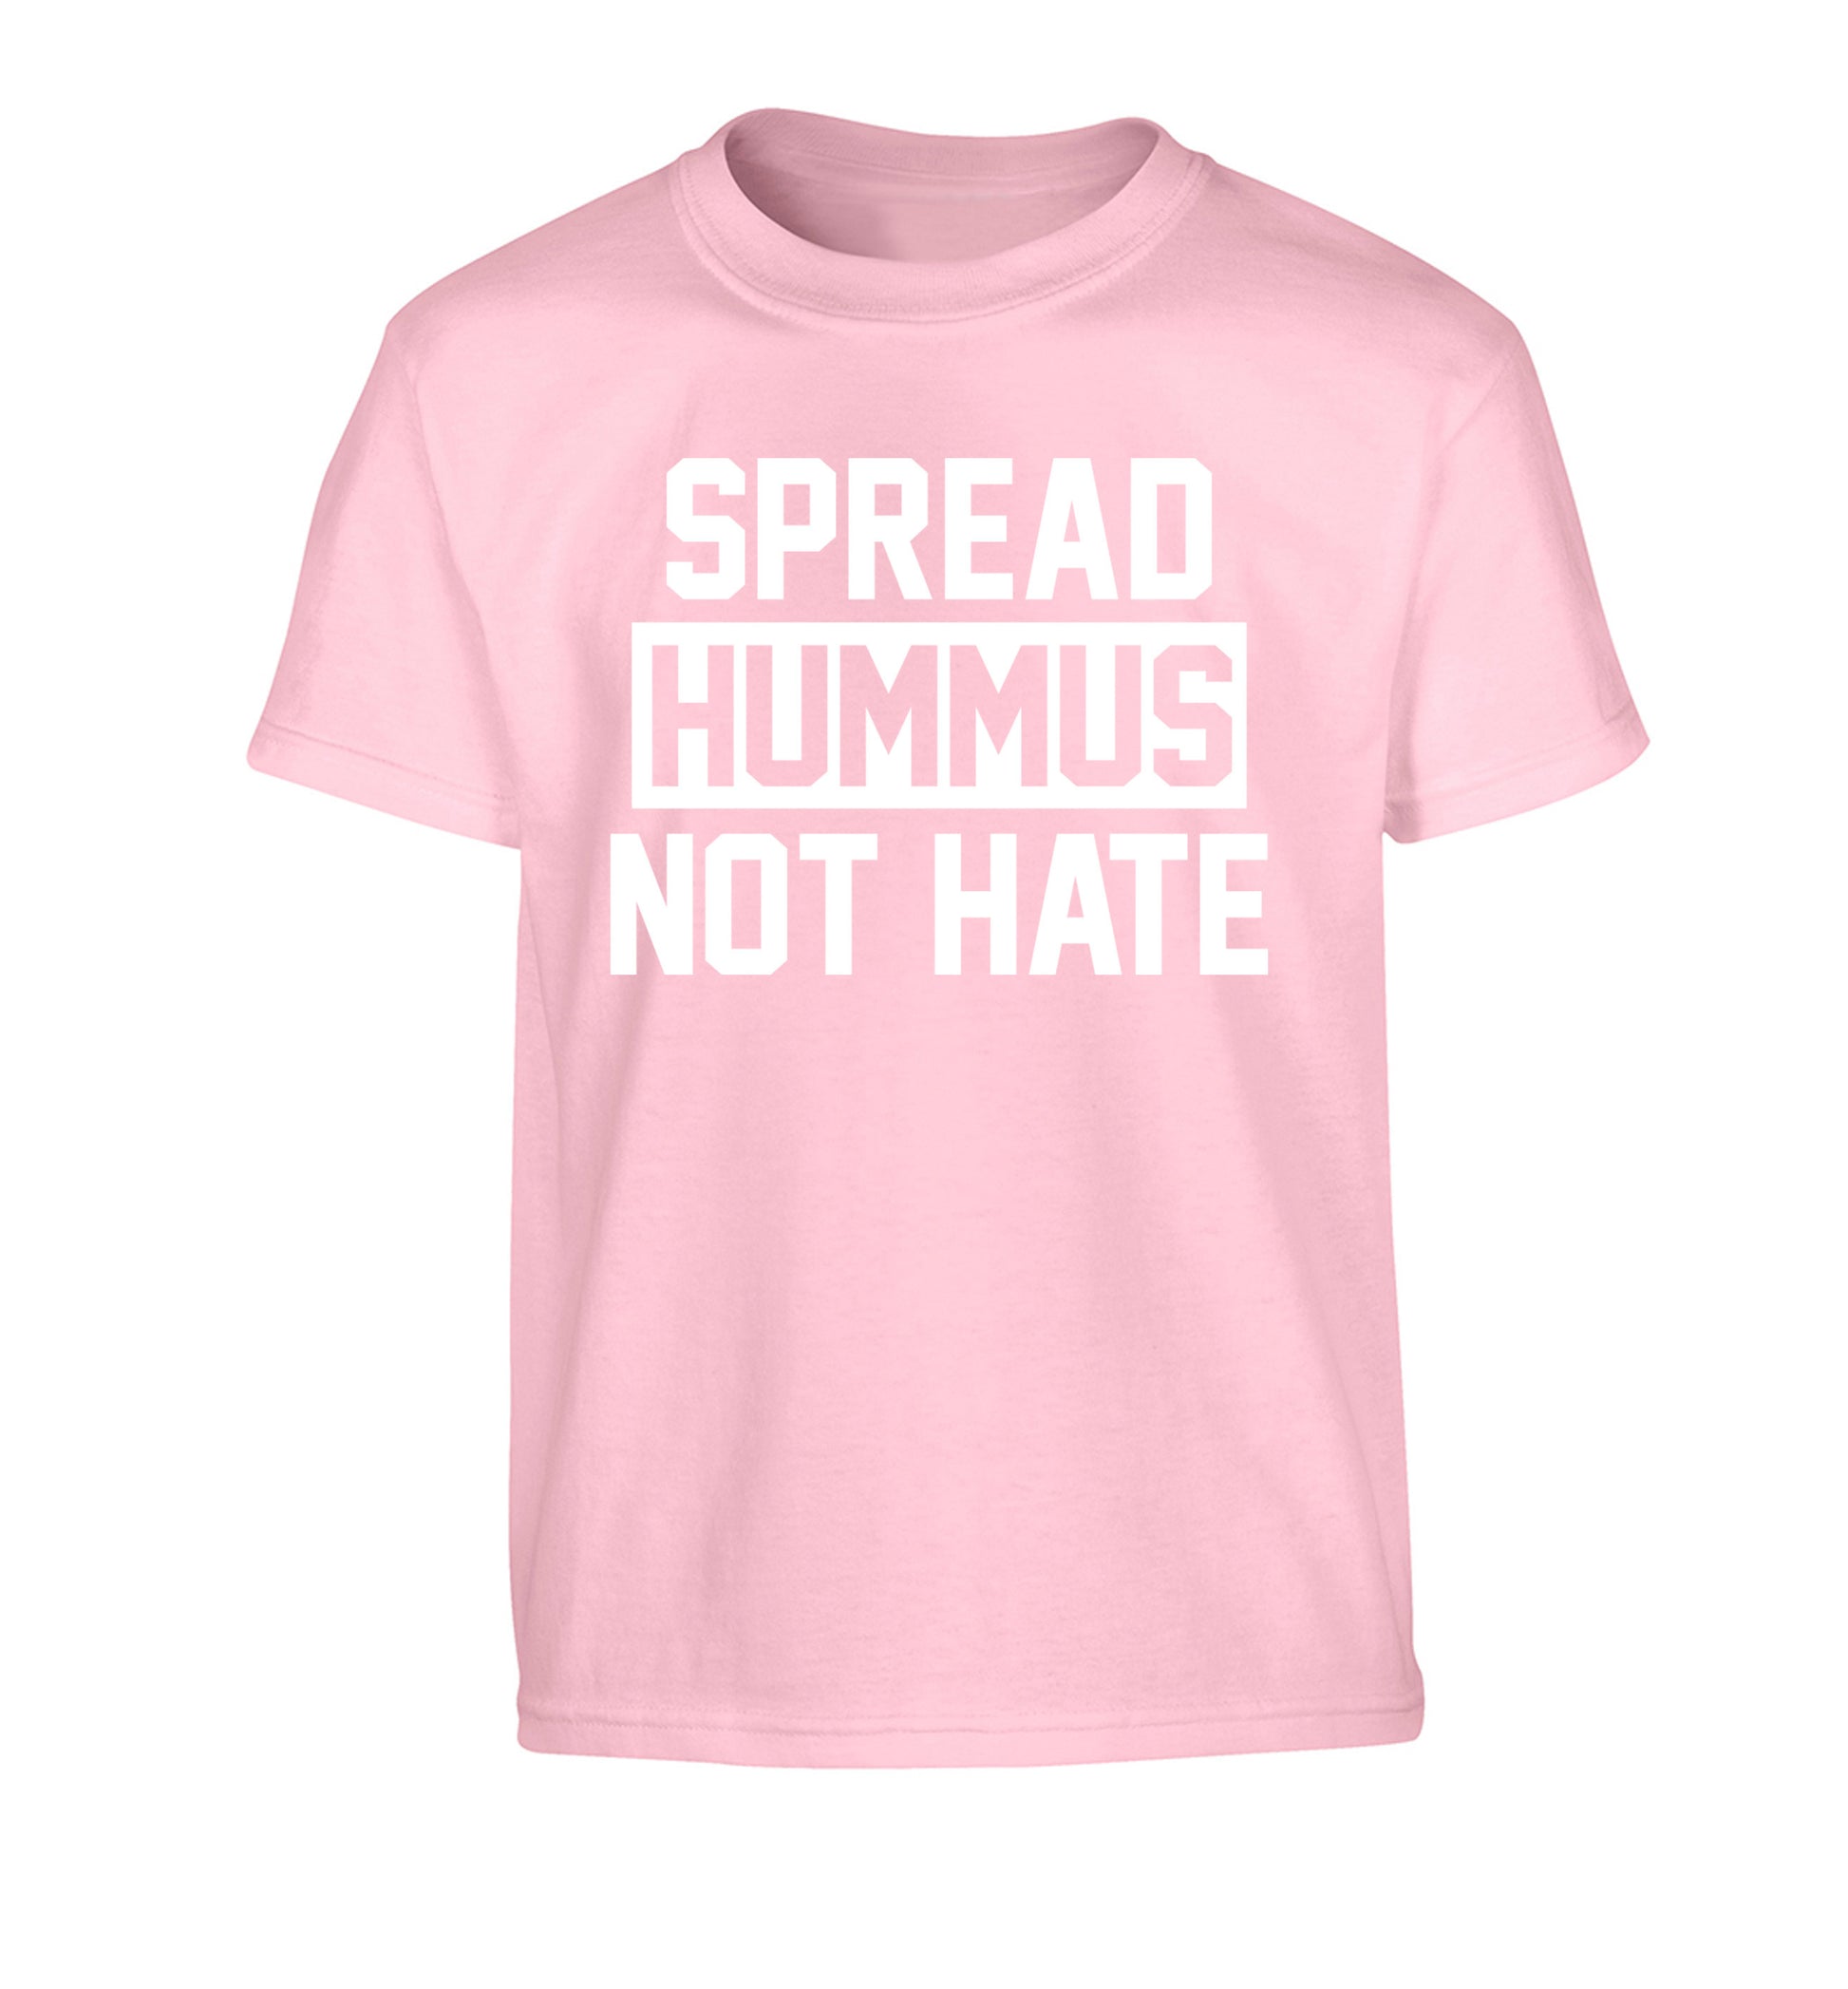 Spread hummus not hate Children's light pink Tshirt 12-14 Years